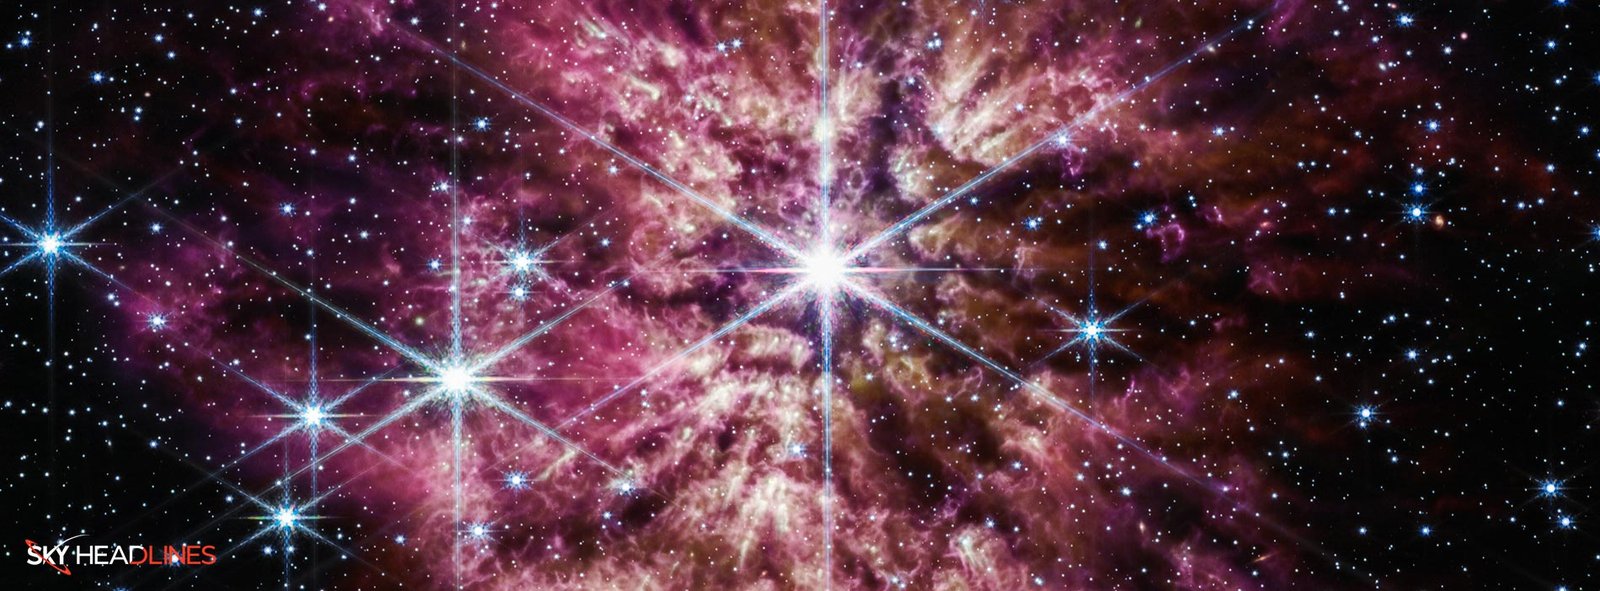 Wolf Rayet Star img 1